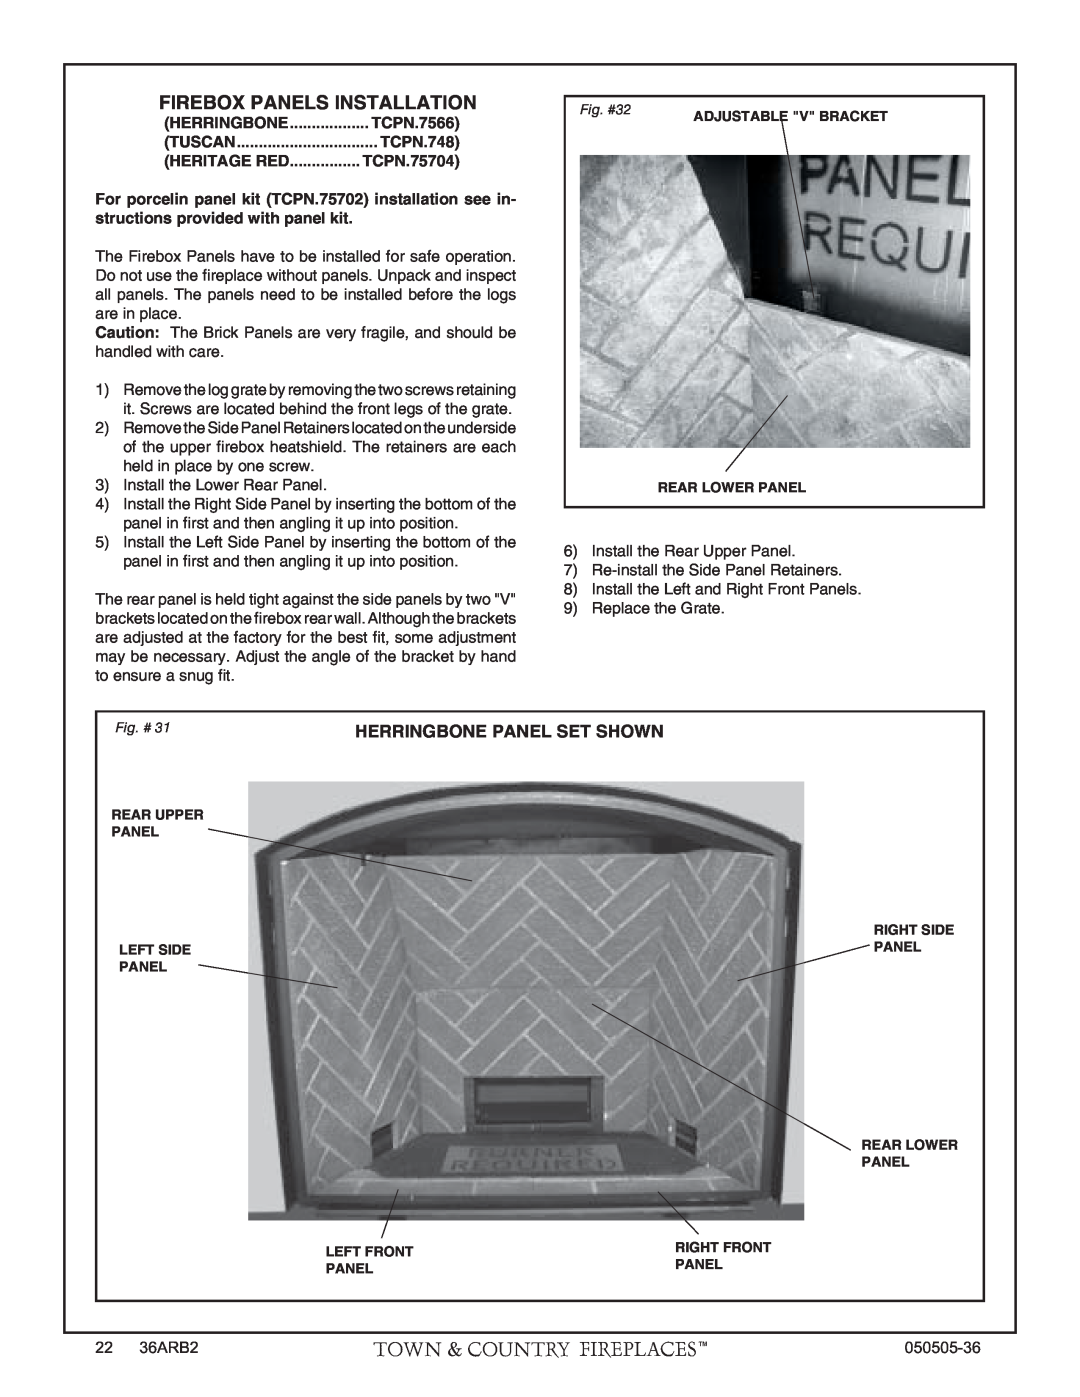 PGS TC36 AR manual Firebox Panels Installation, Herringbone Panel Set Shown 